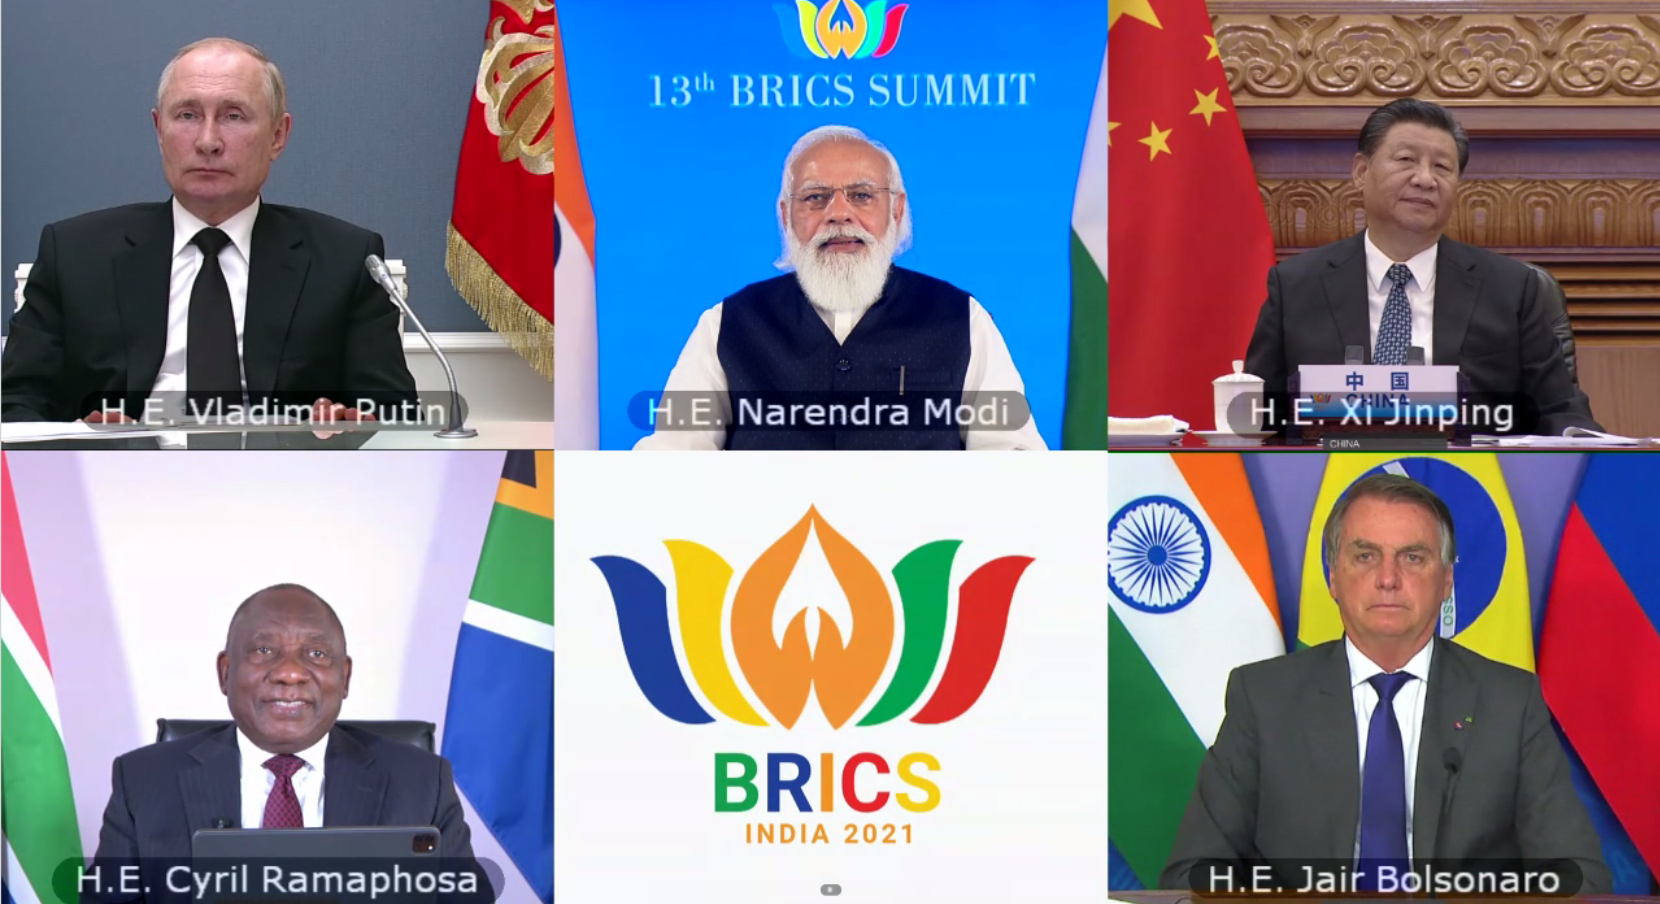 BRICS summit 2021